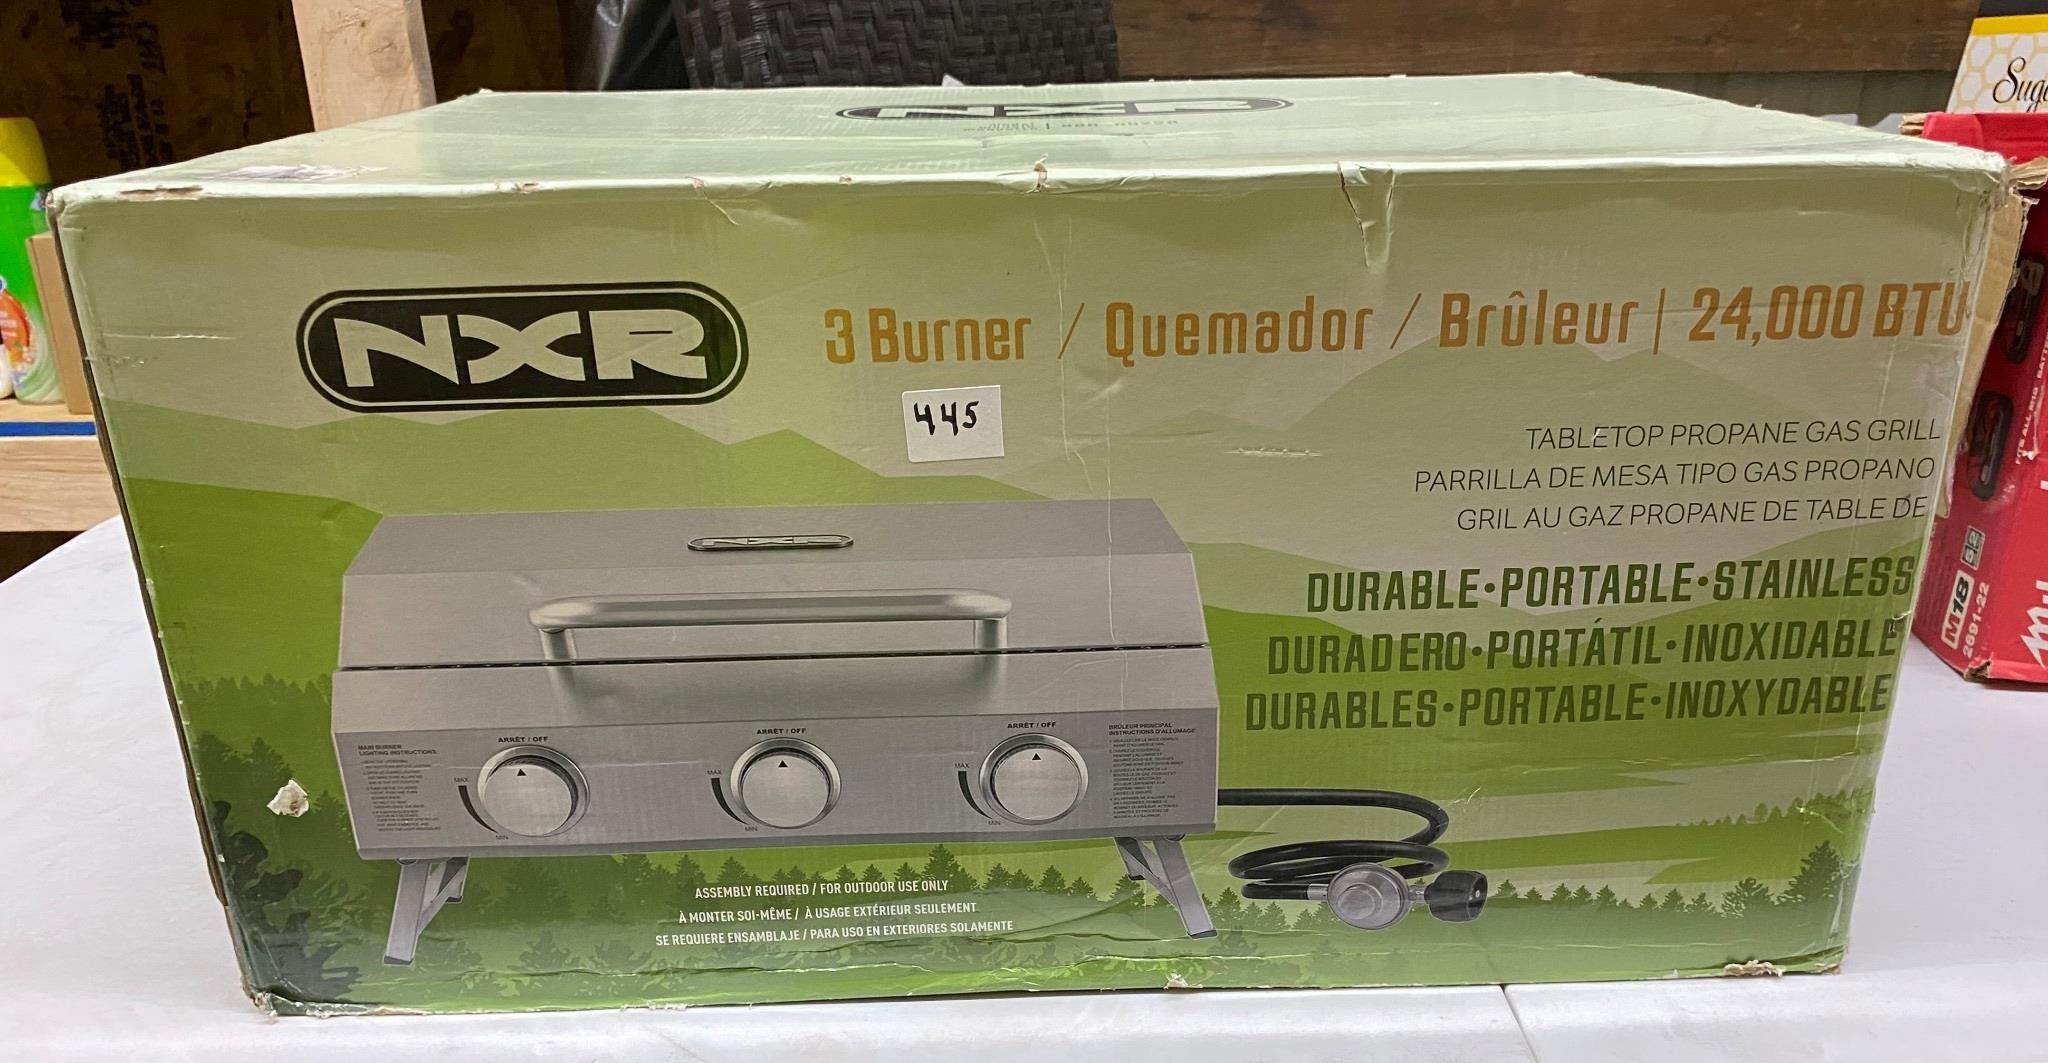 NXR 3 Burner Portable TableTop Propane Gas Grill